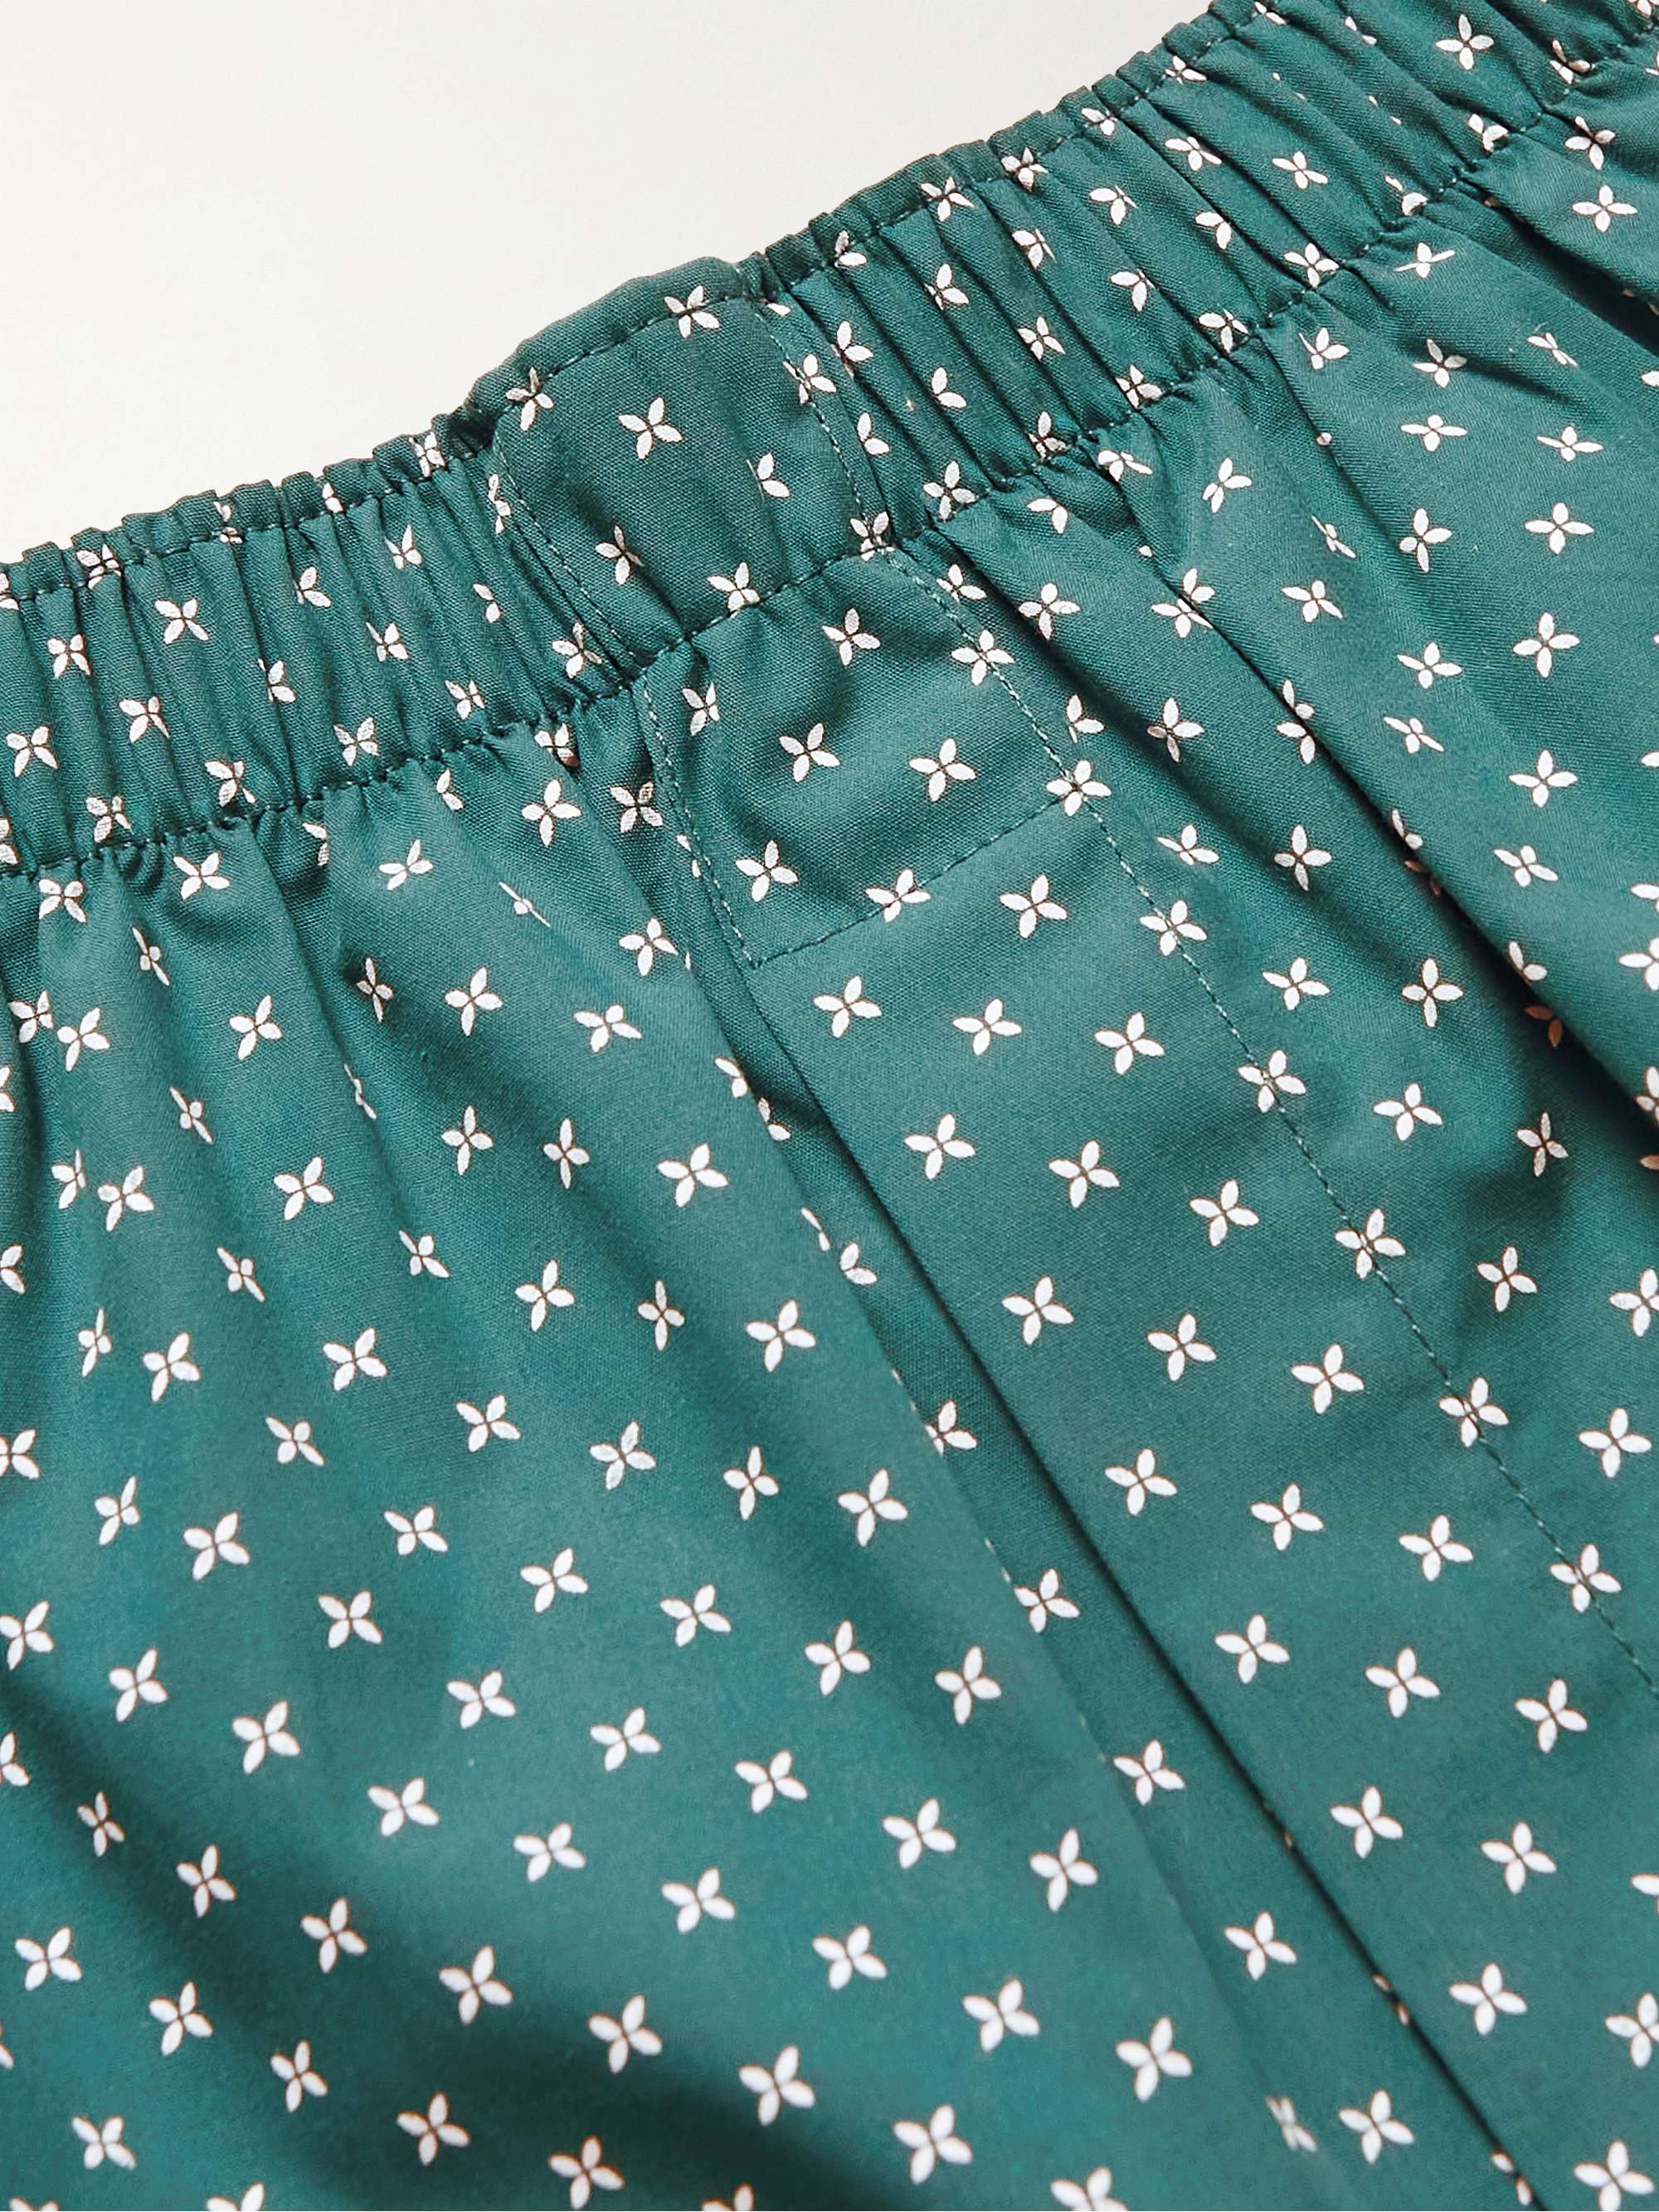 SUNSPEL Printed Cotton Boxer Shorts